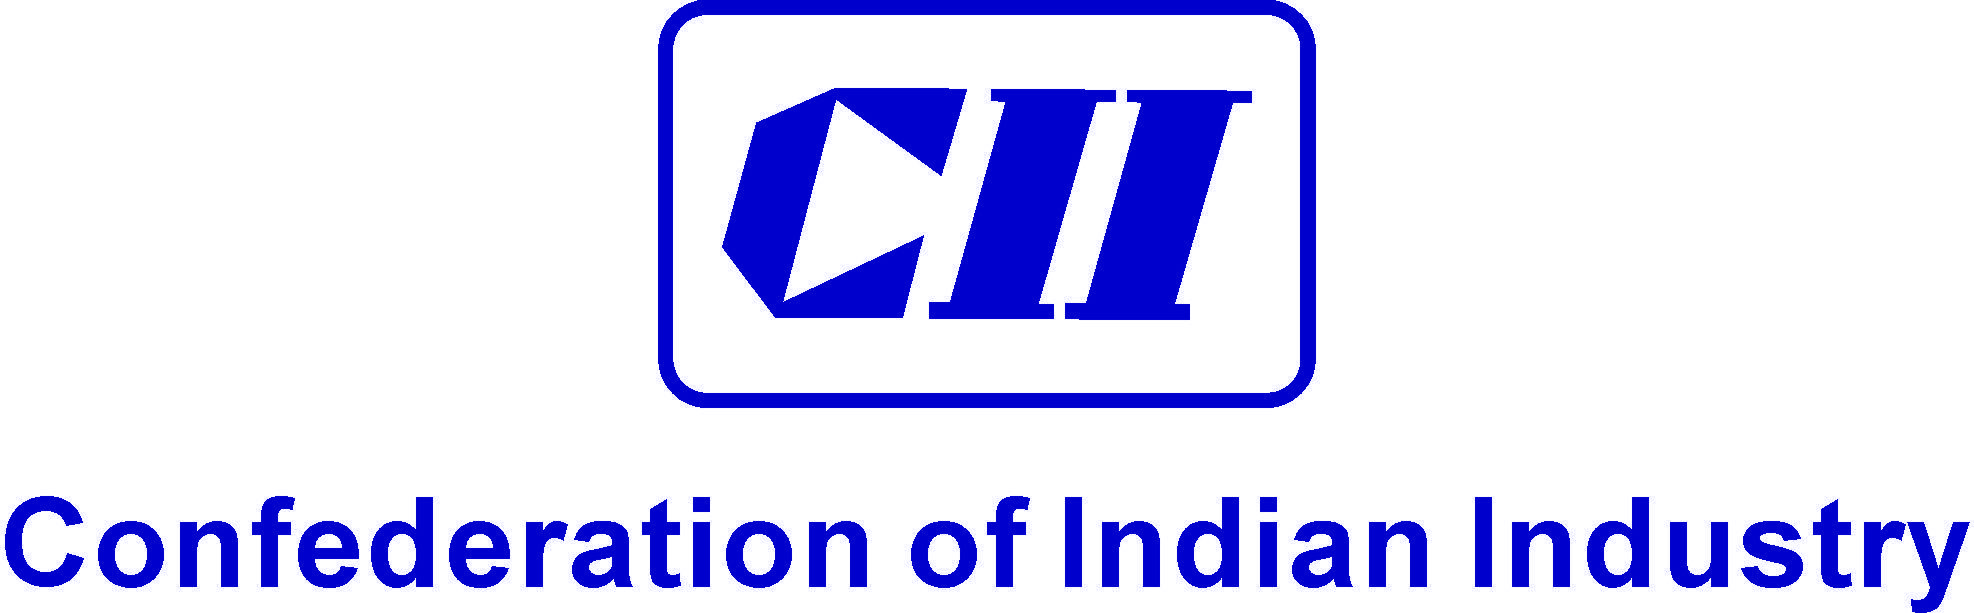 CII Logo - File:CII logo.jpg - Wikimedia Commons